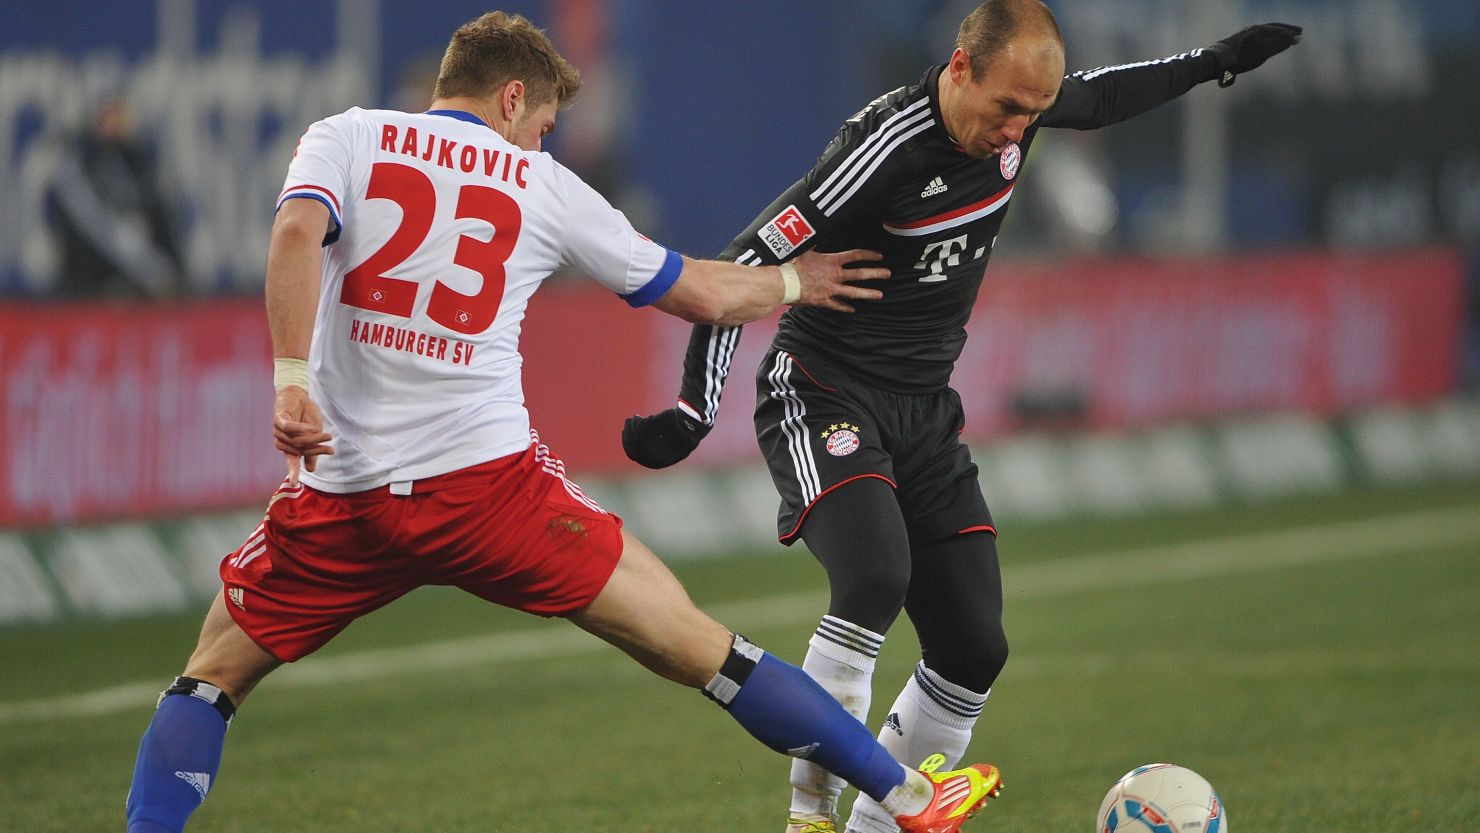 Slobodan Rajkovic of Hamburg challenges Bayern Munich's Arjen Robben during the 1-1 draw on Saturday night